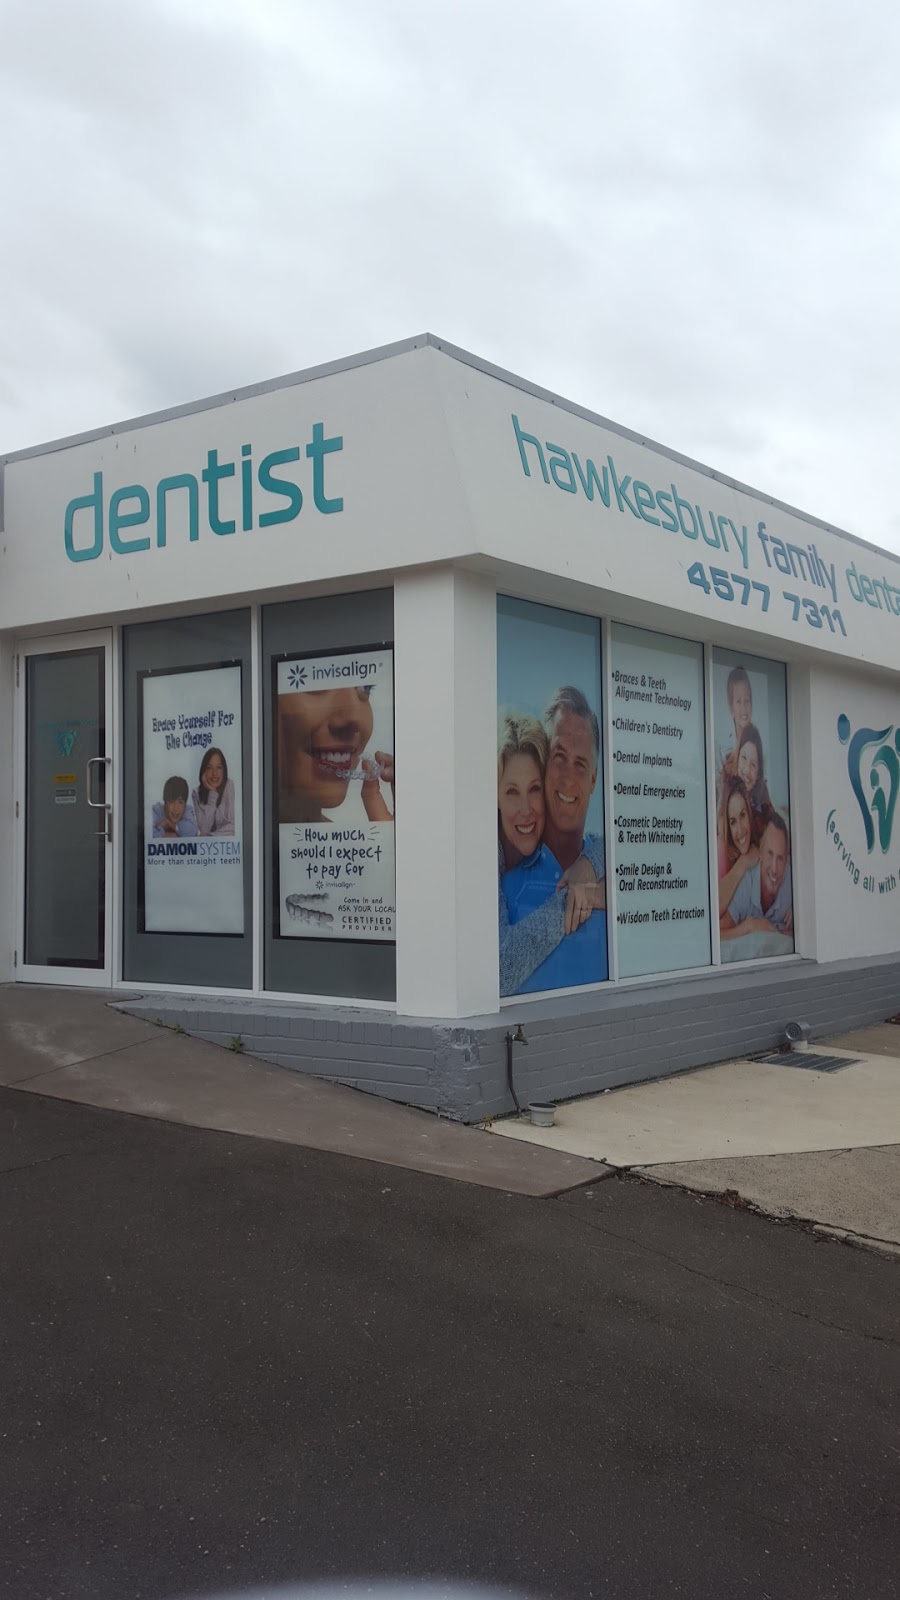 Hawkesbury Family Dental | dentist | 329 George St, Windsor NSW 2756, Australia | 0245777311 OR +61 2 4577 7311